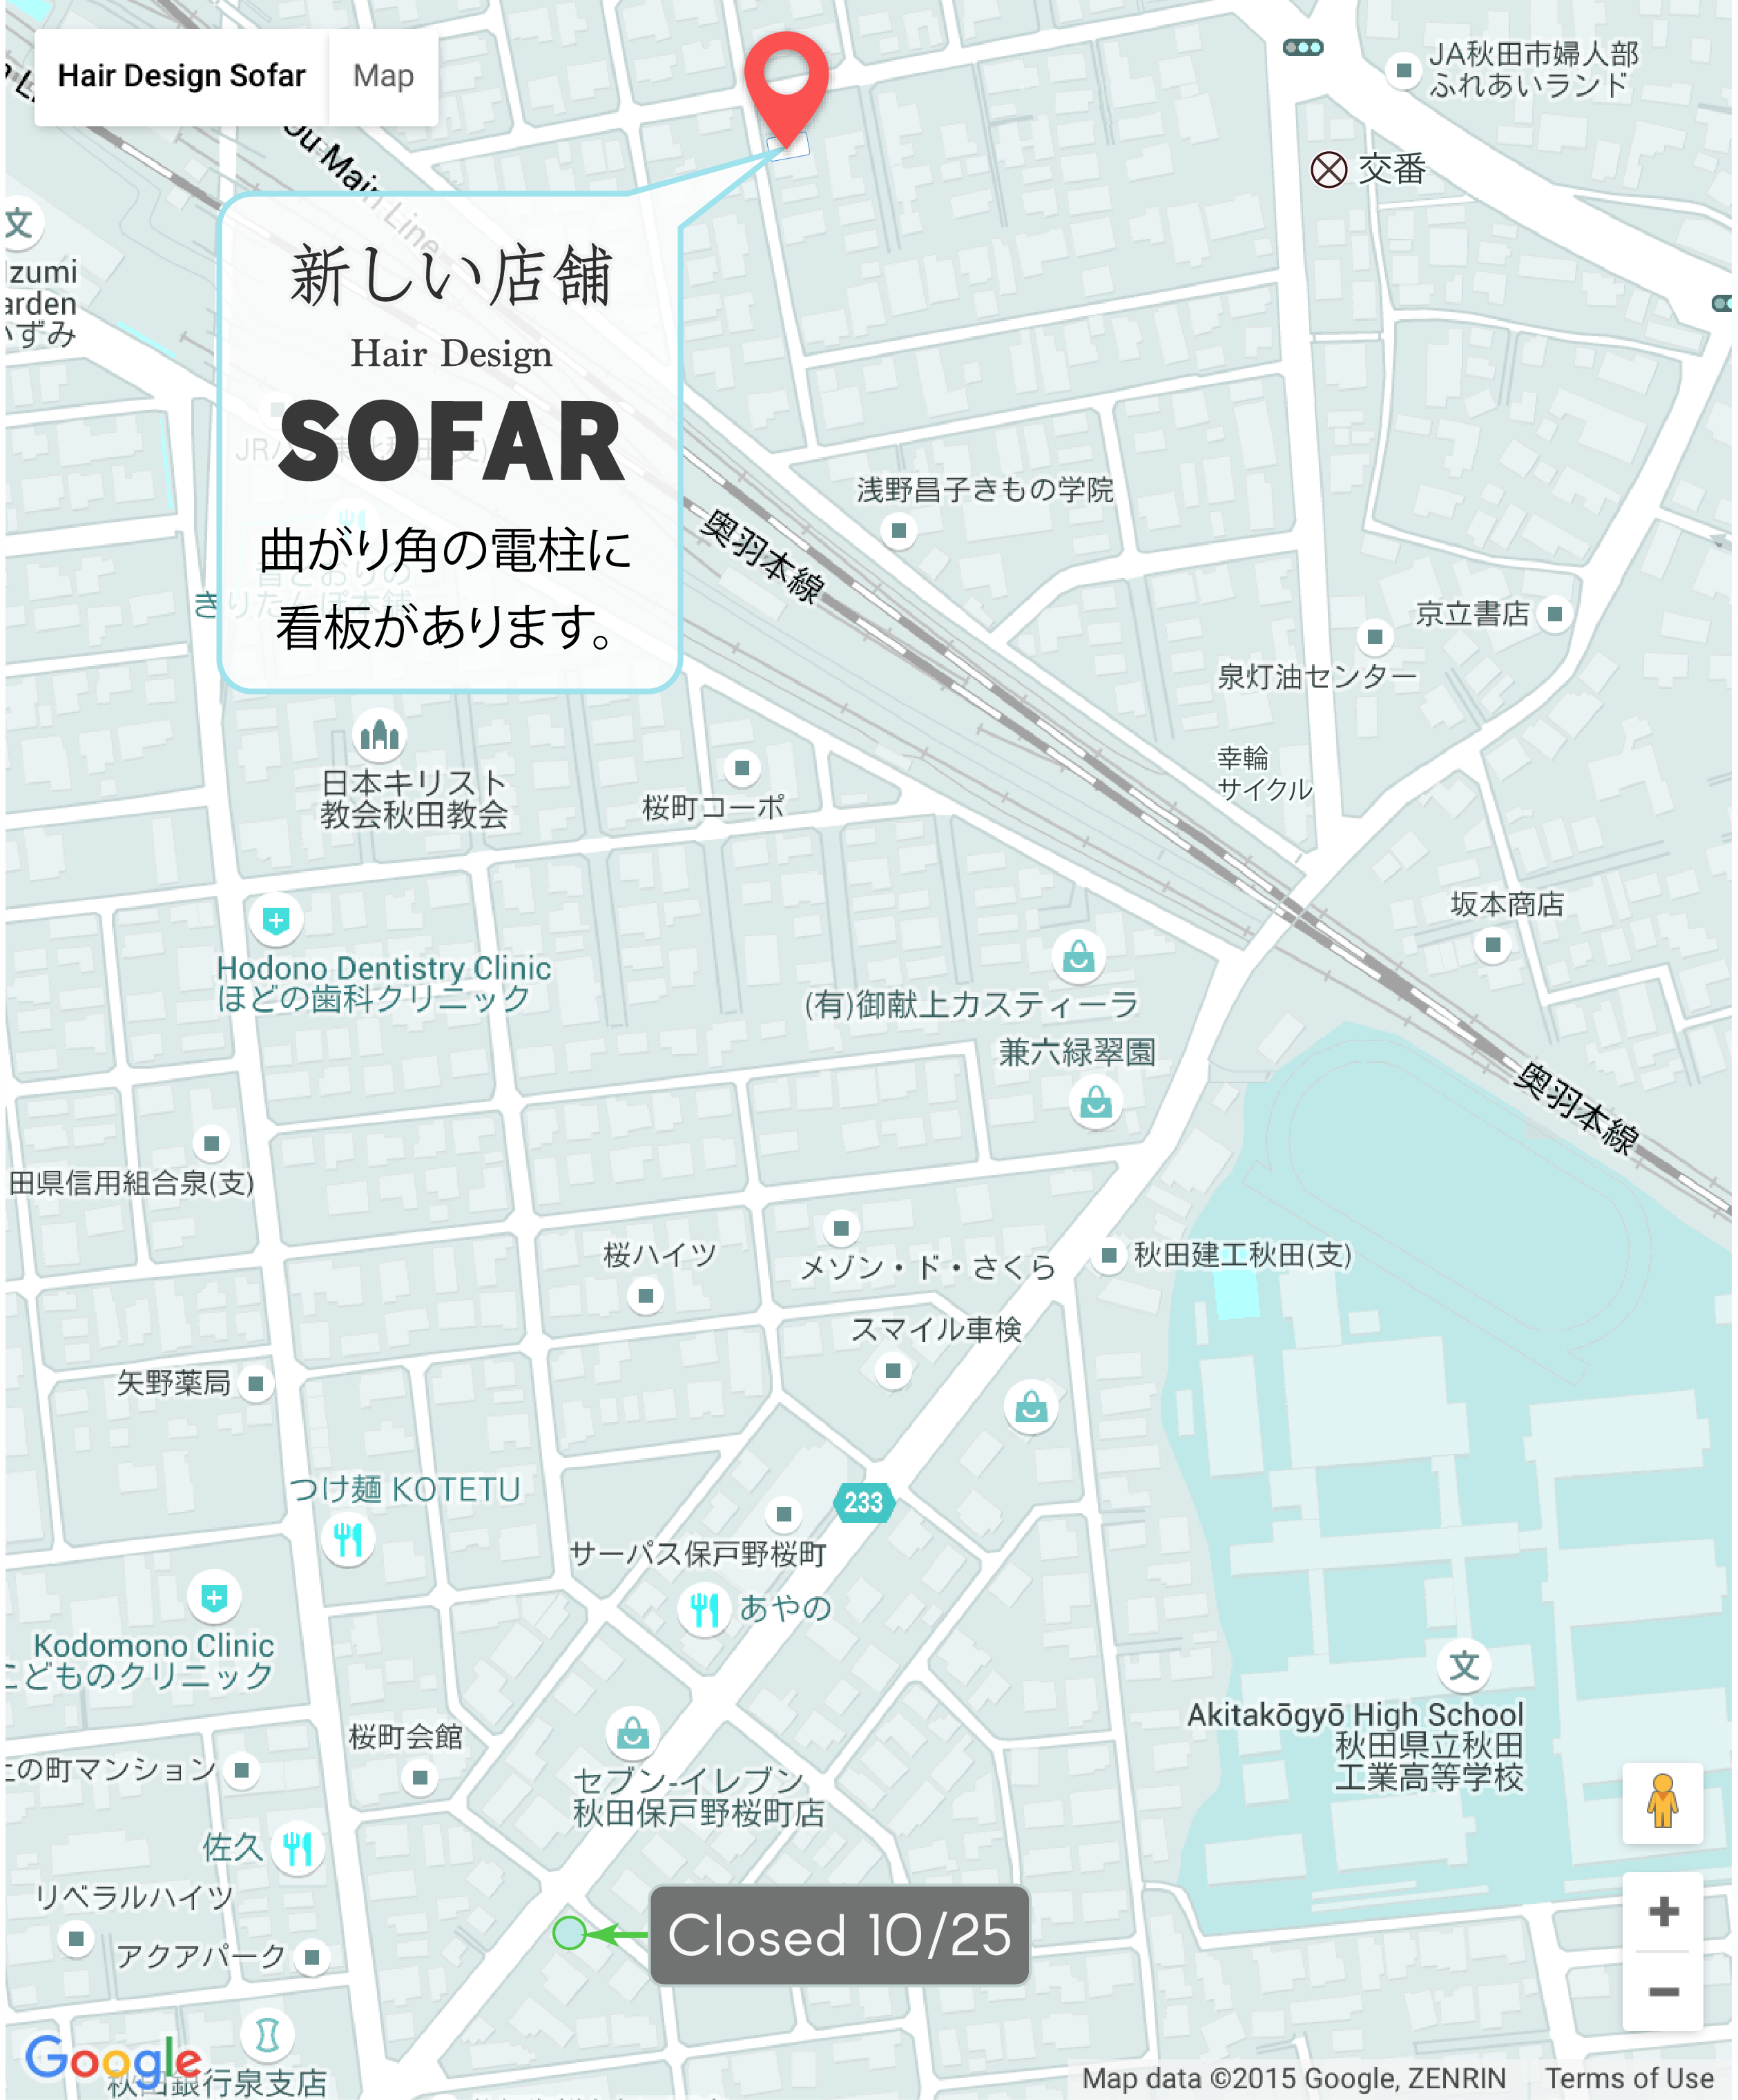 Sofarの移店先が載った住所の画像